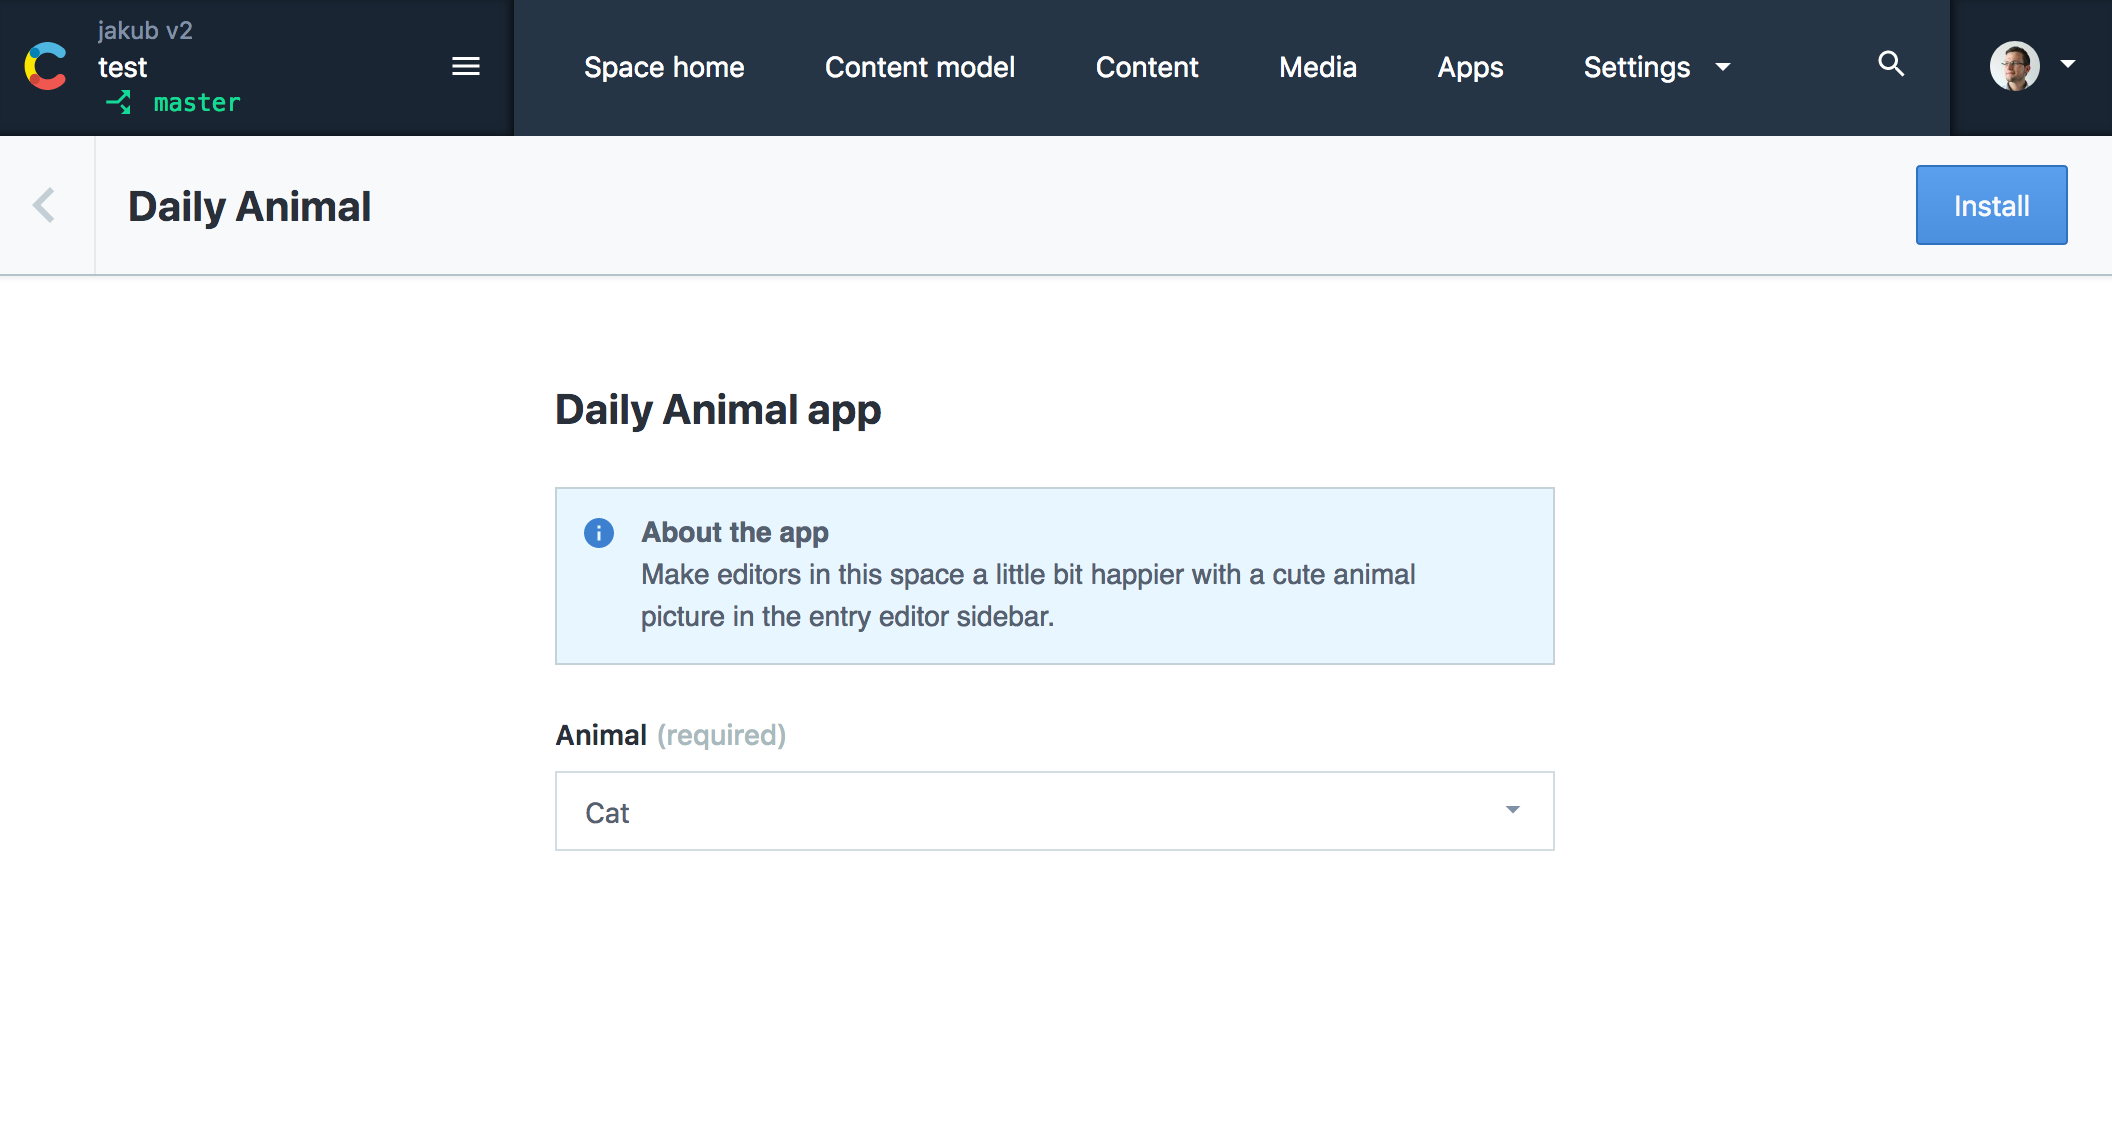 Daily Animal app: configuration